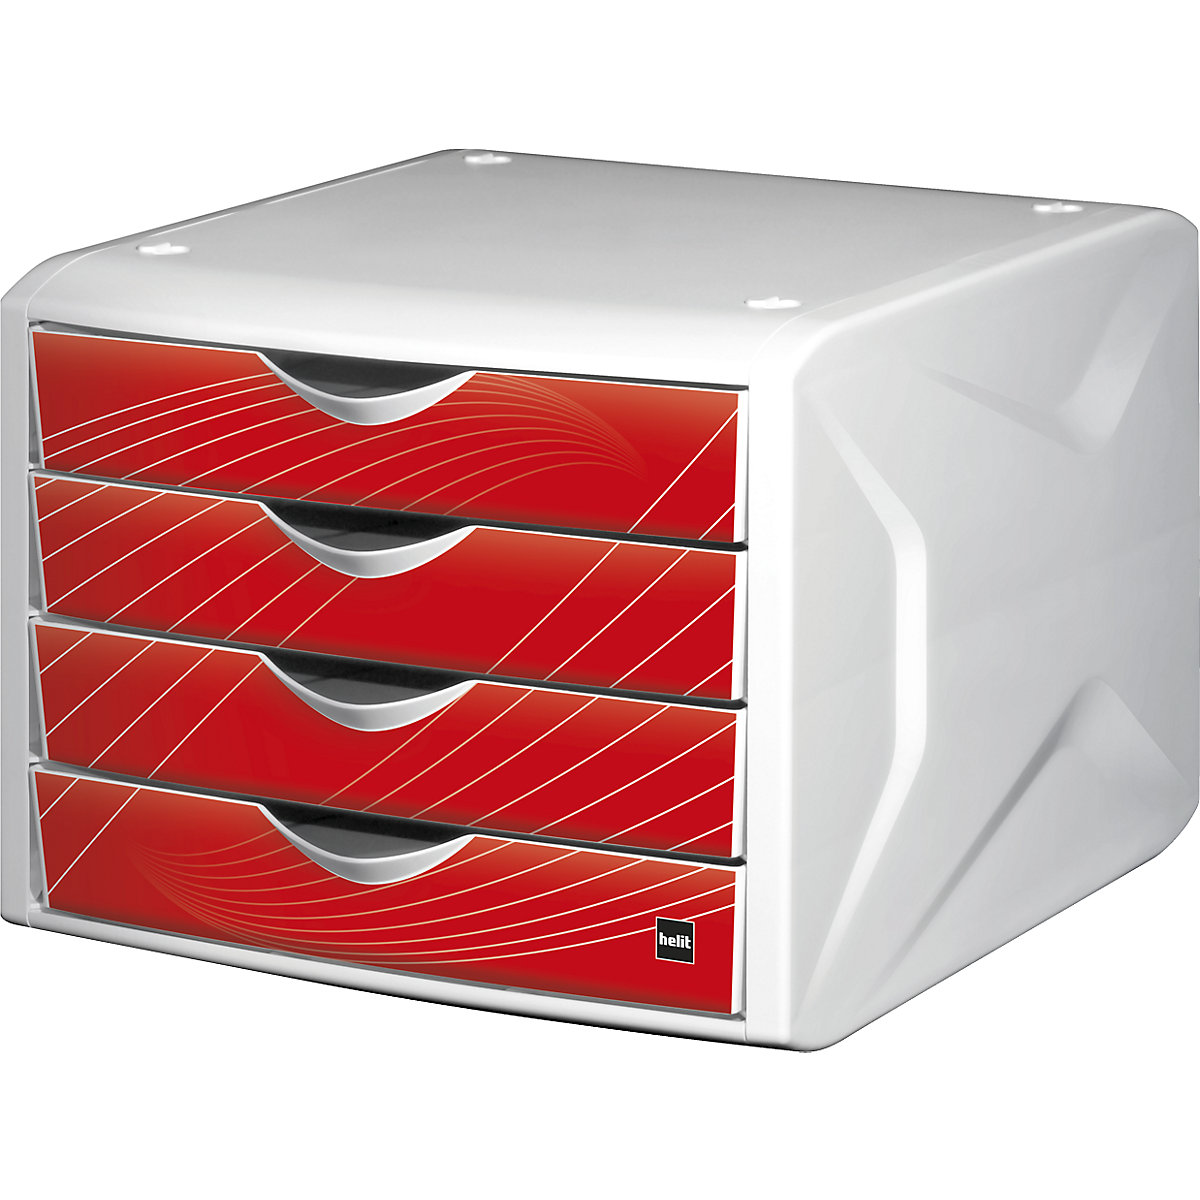 Zásuvkový box – helit, v x š x h 212 x 262 x 330 mm, OJ 5 ks, dizajn zásuvky red rook-5